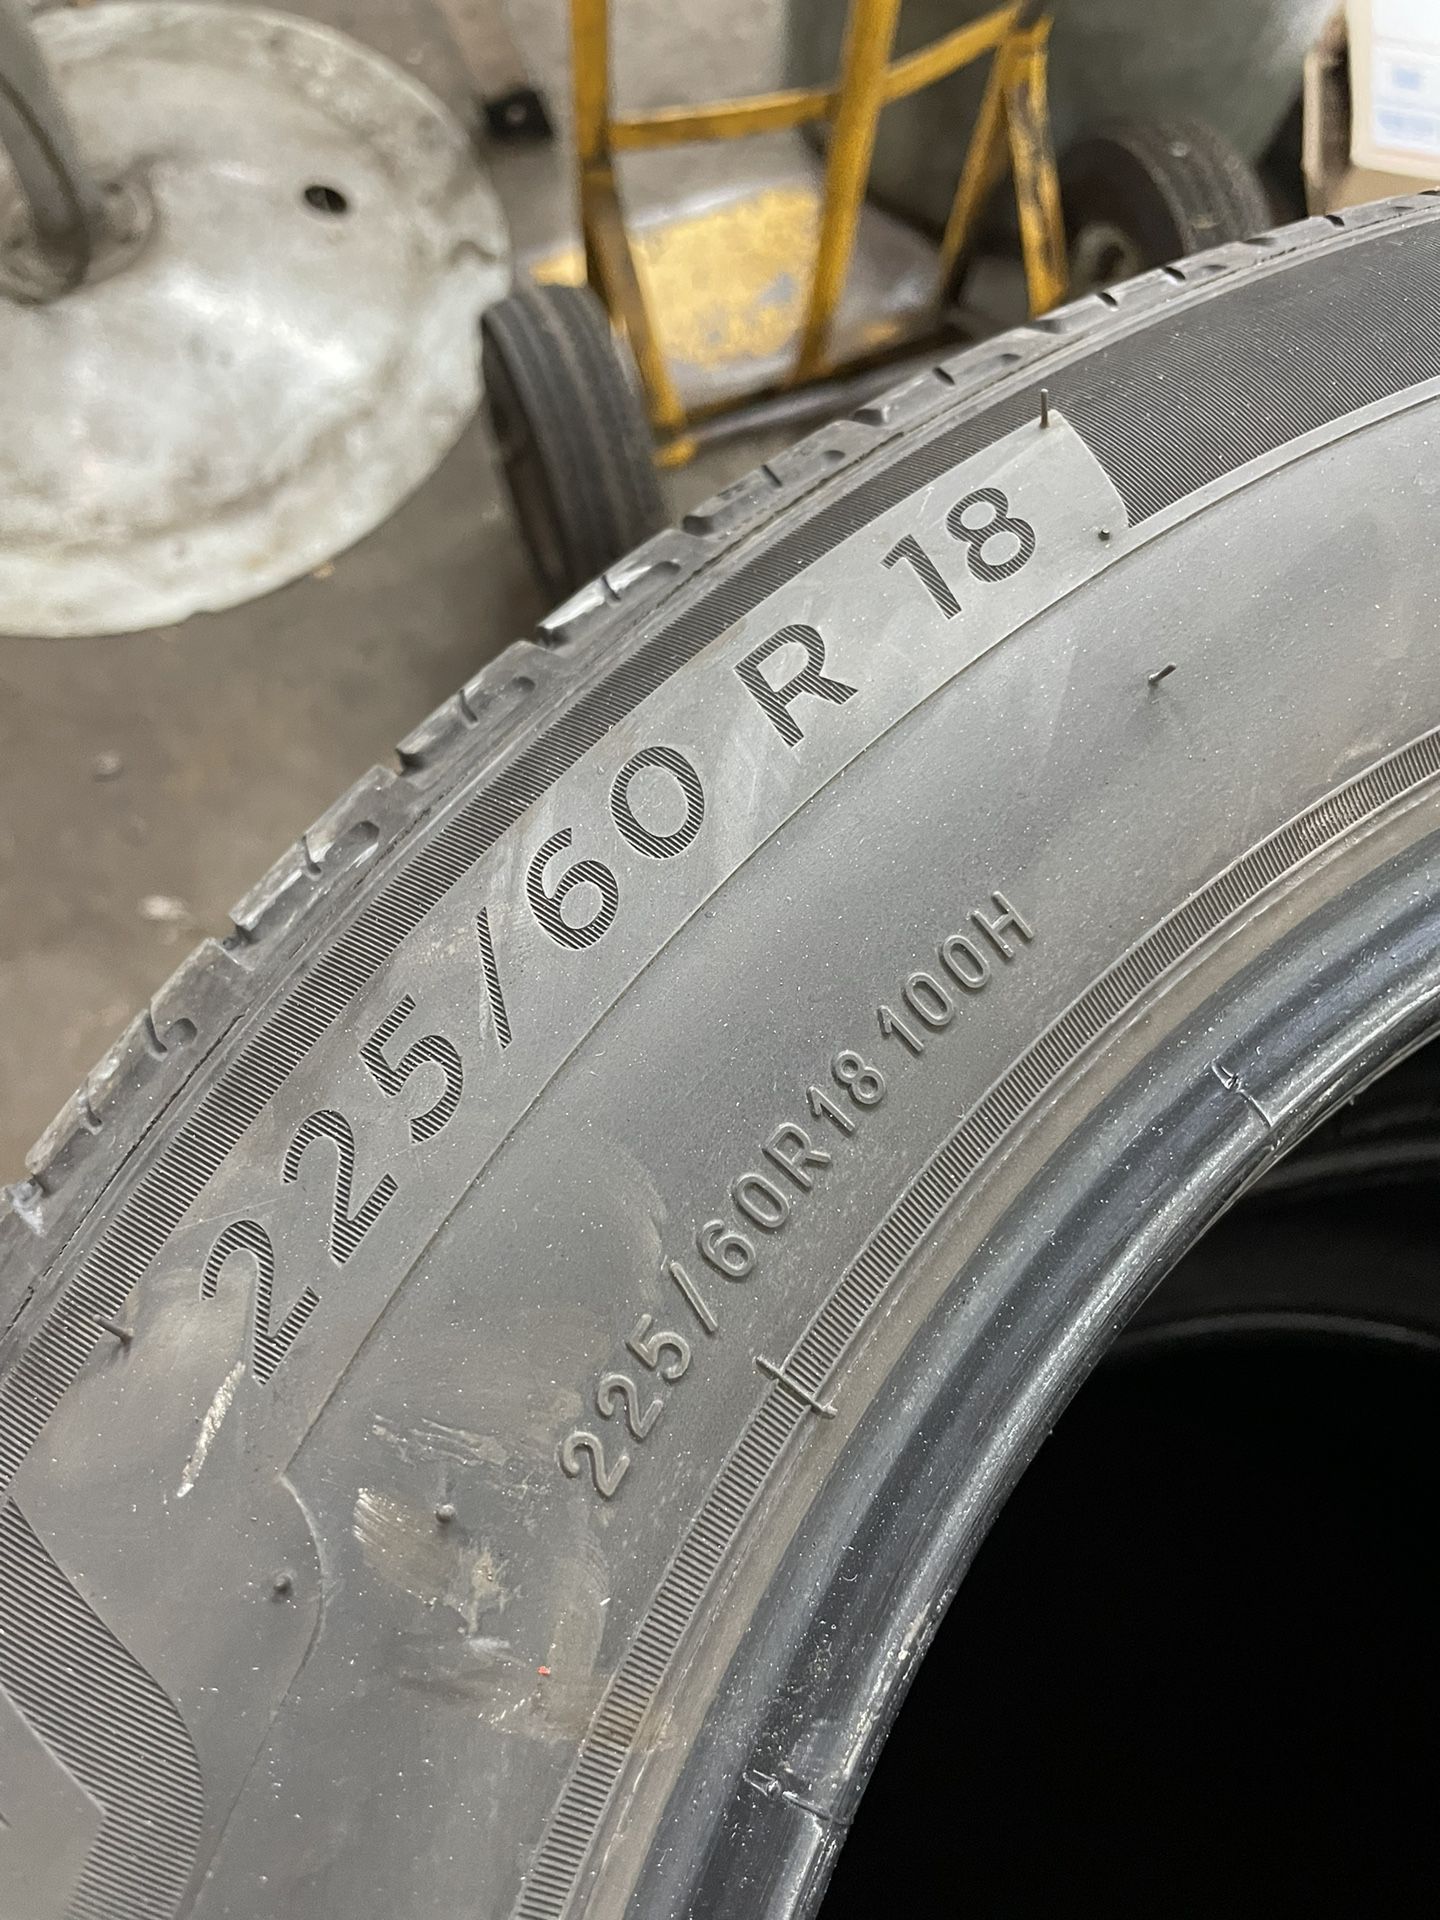 Set Of 4 Michelin Primacy Tires 225/60R18